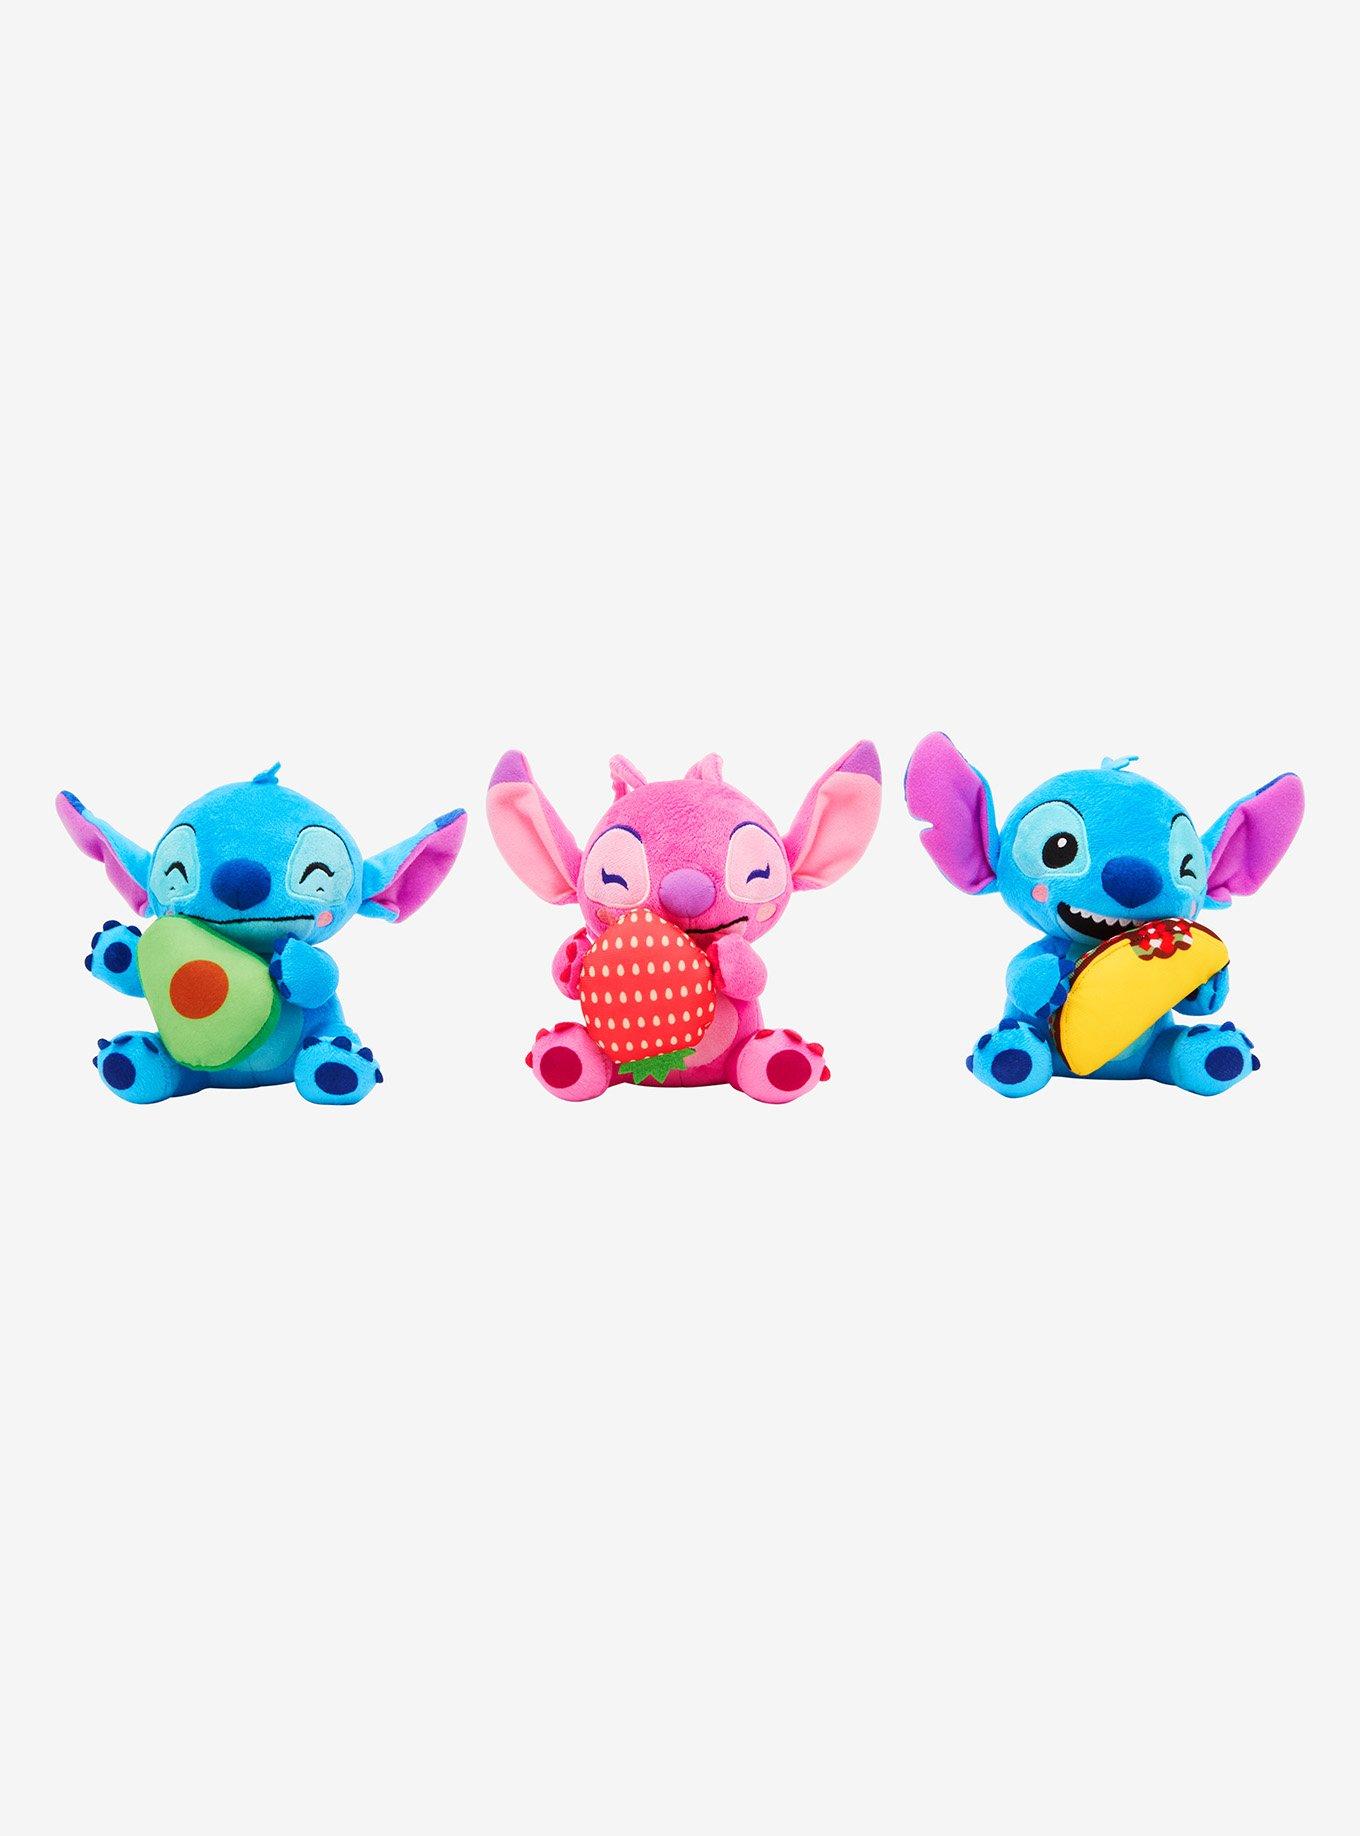 Trends International Disney Lilo And Stitch - Angel And Stitch